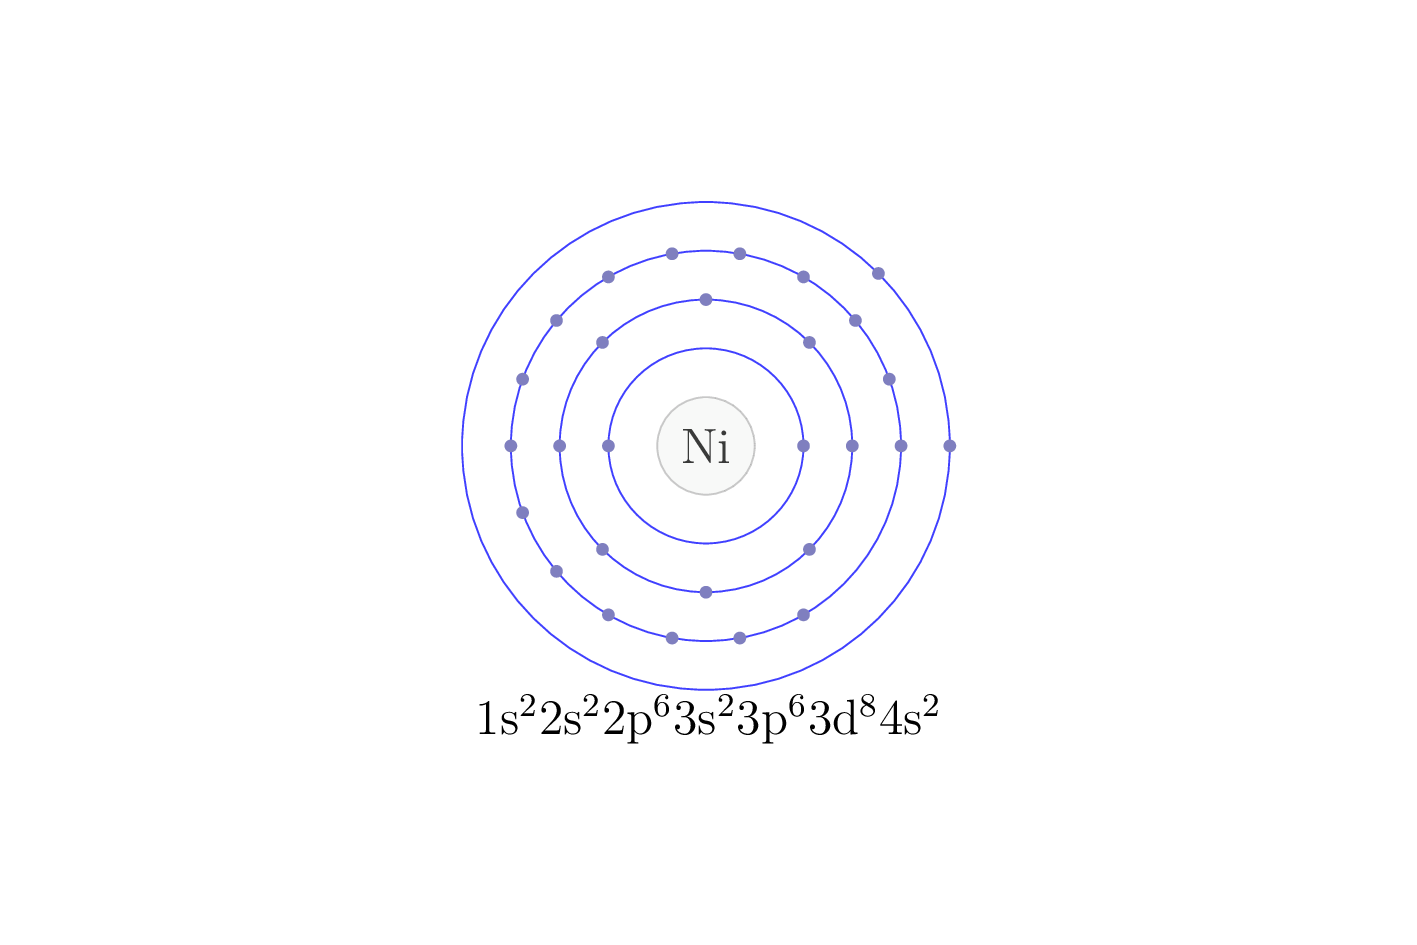 electron configuration of element Ni